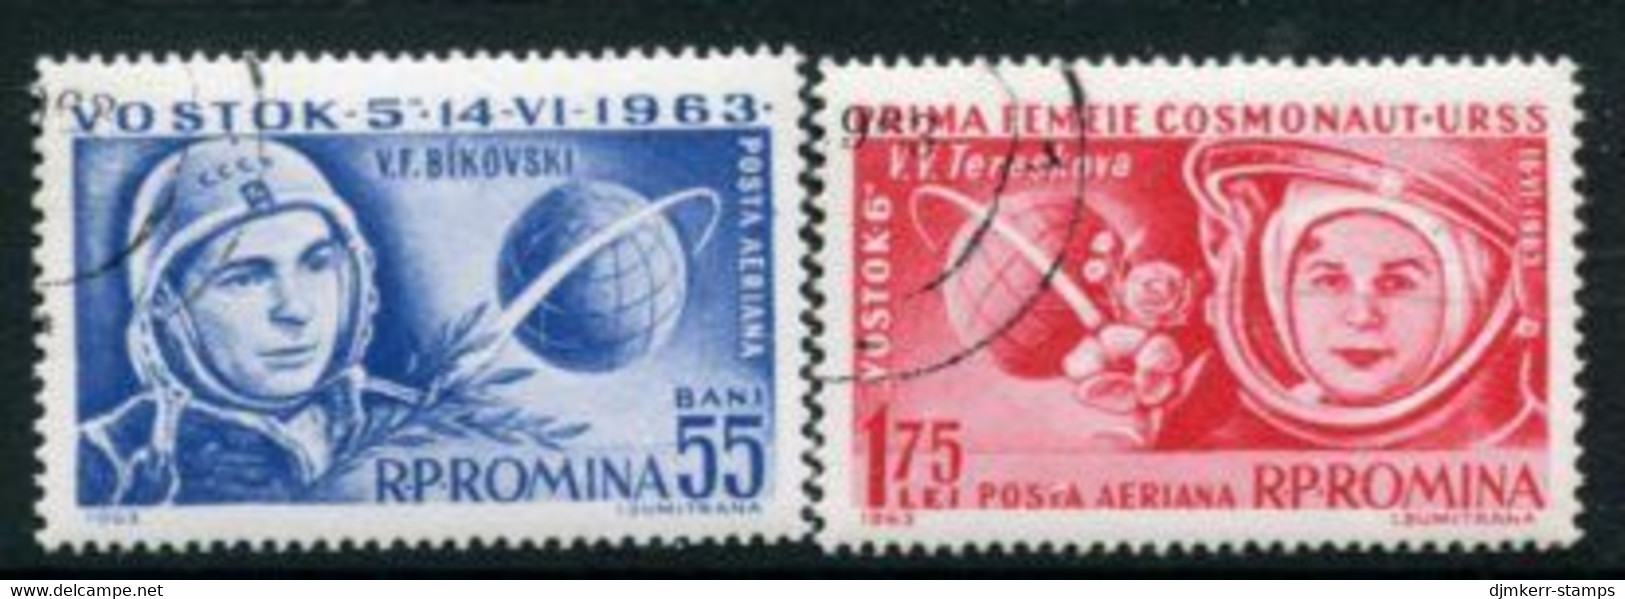 ROMANIA 1963 Vostok 5 And 6 Space Flights Used.  Michel 2171-72 - Gebruikt